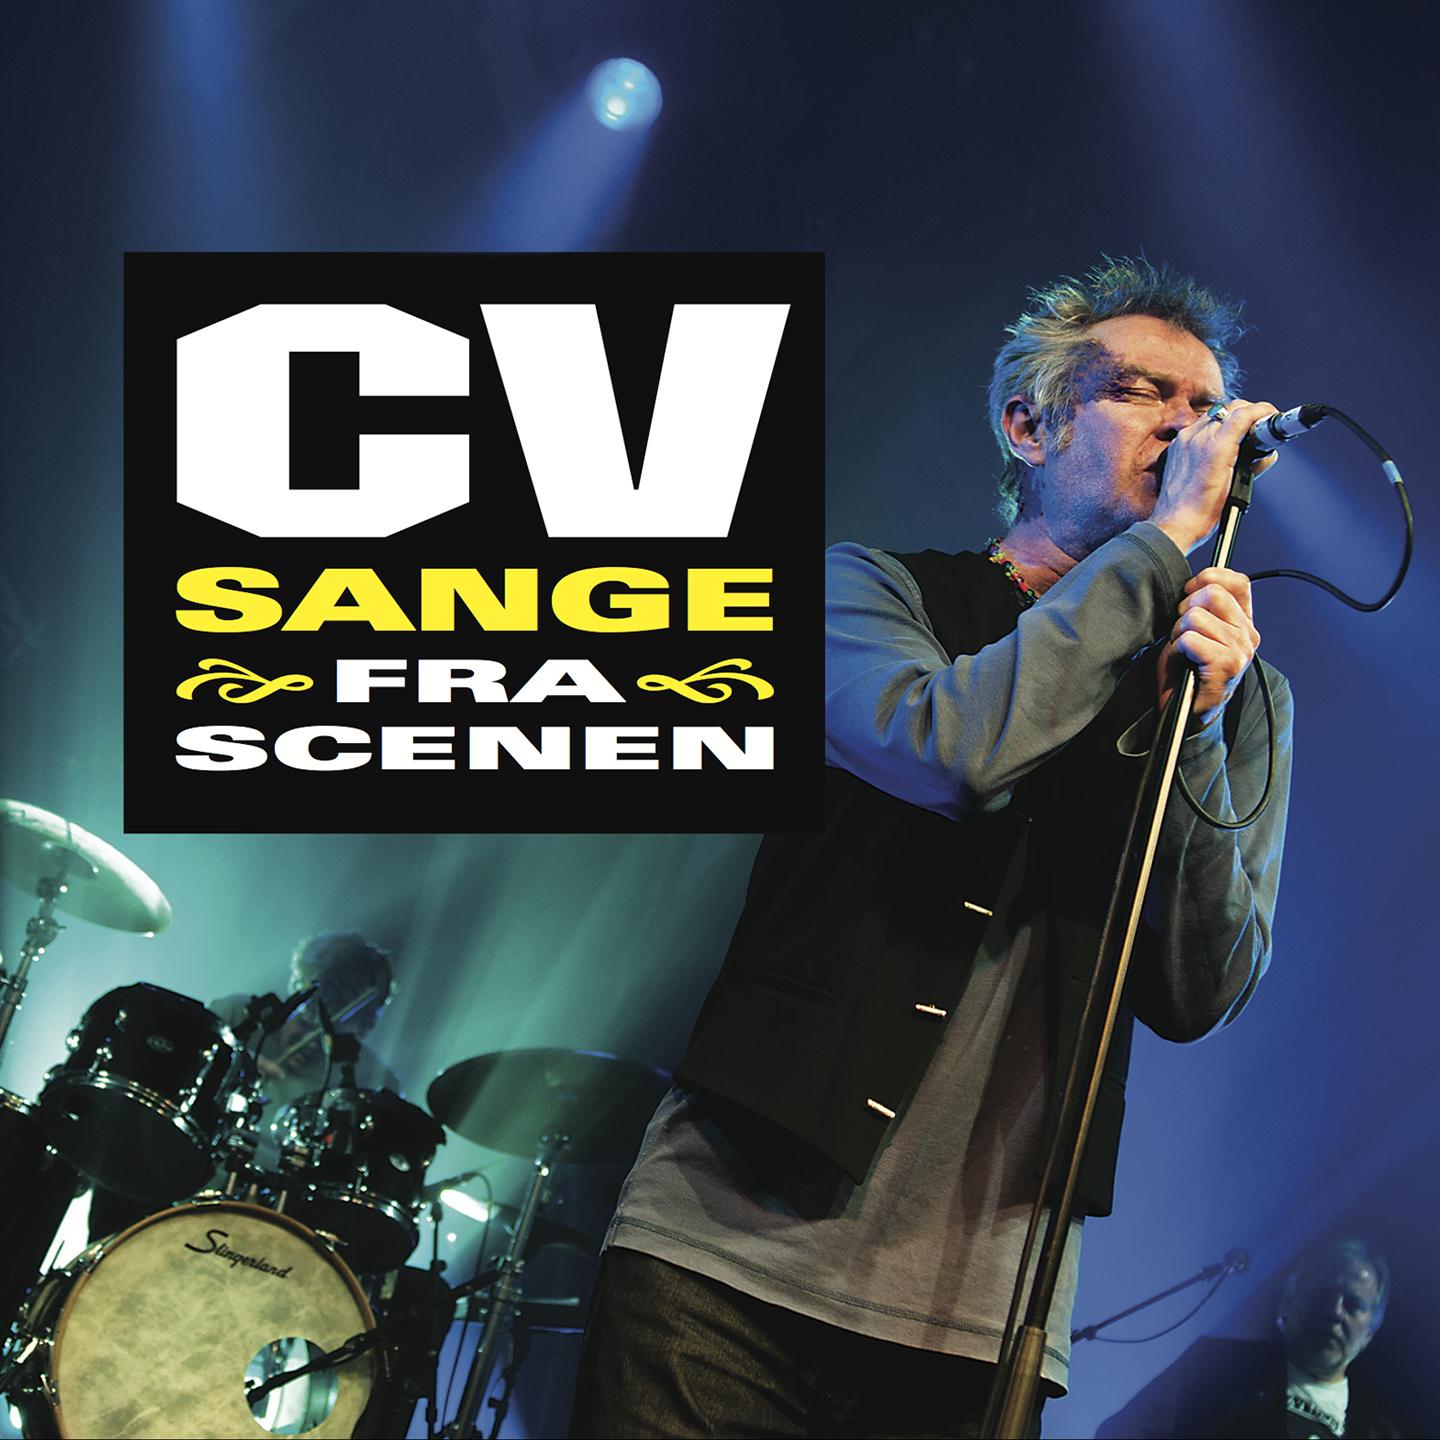 C.V. Jørgensen - Det Ganske Lille Band